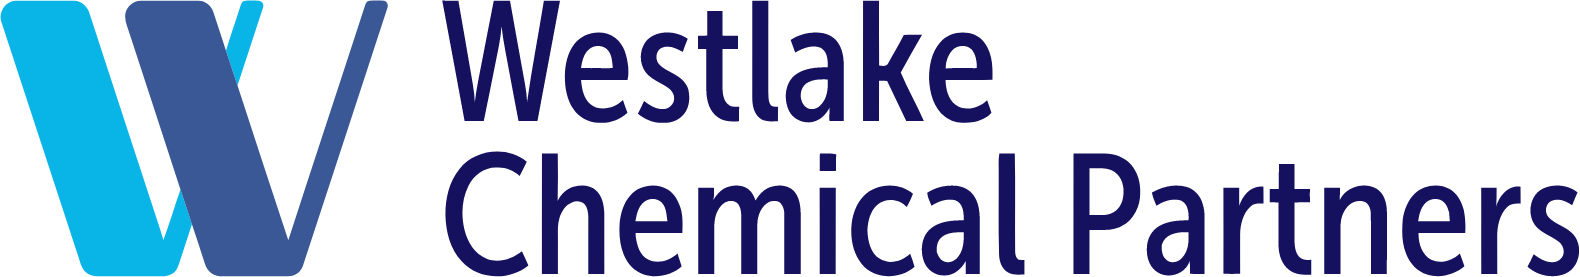 Westlake Chemical Partners logo large (transparent PNG)